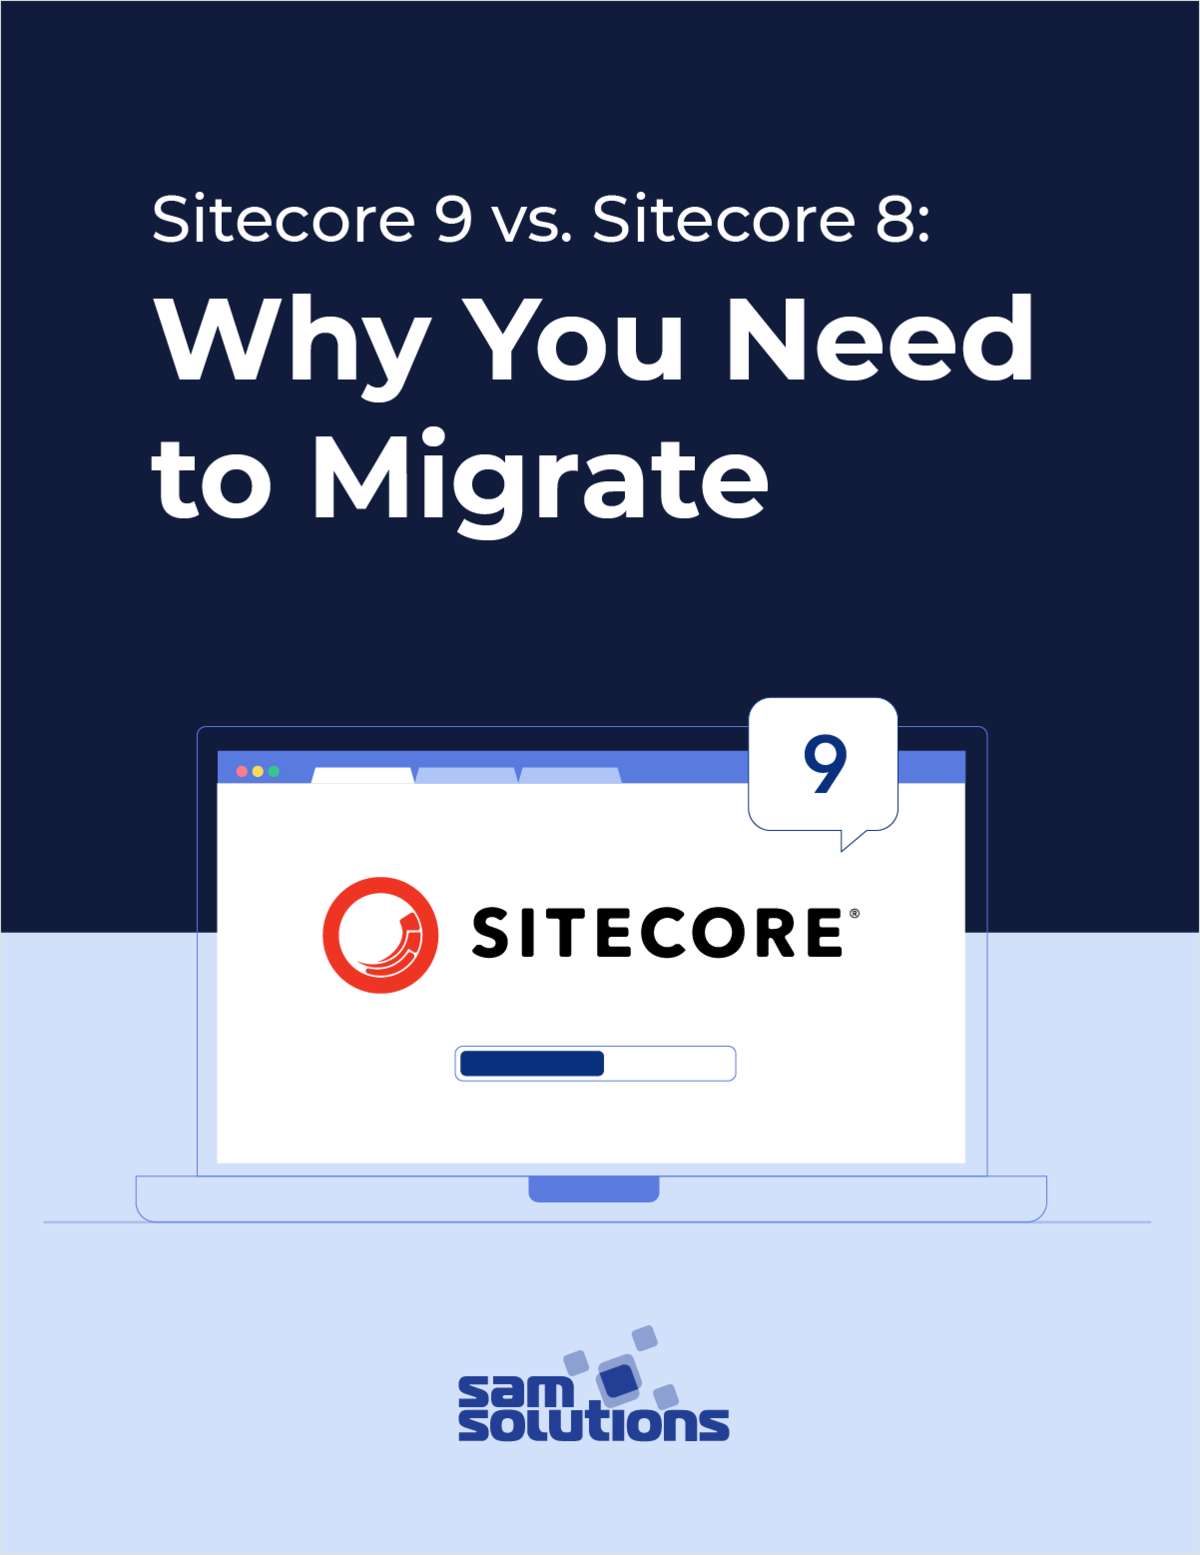 Sitecore 9 vs. Sitecore 8: Why You Need to Migrate